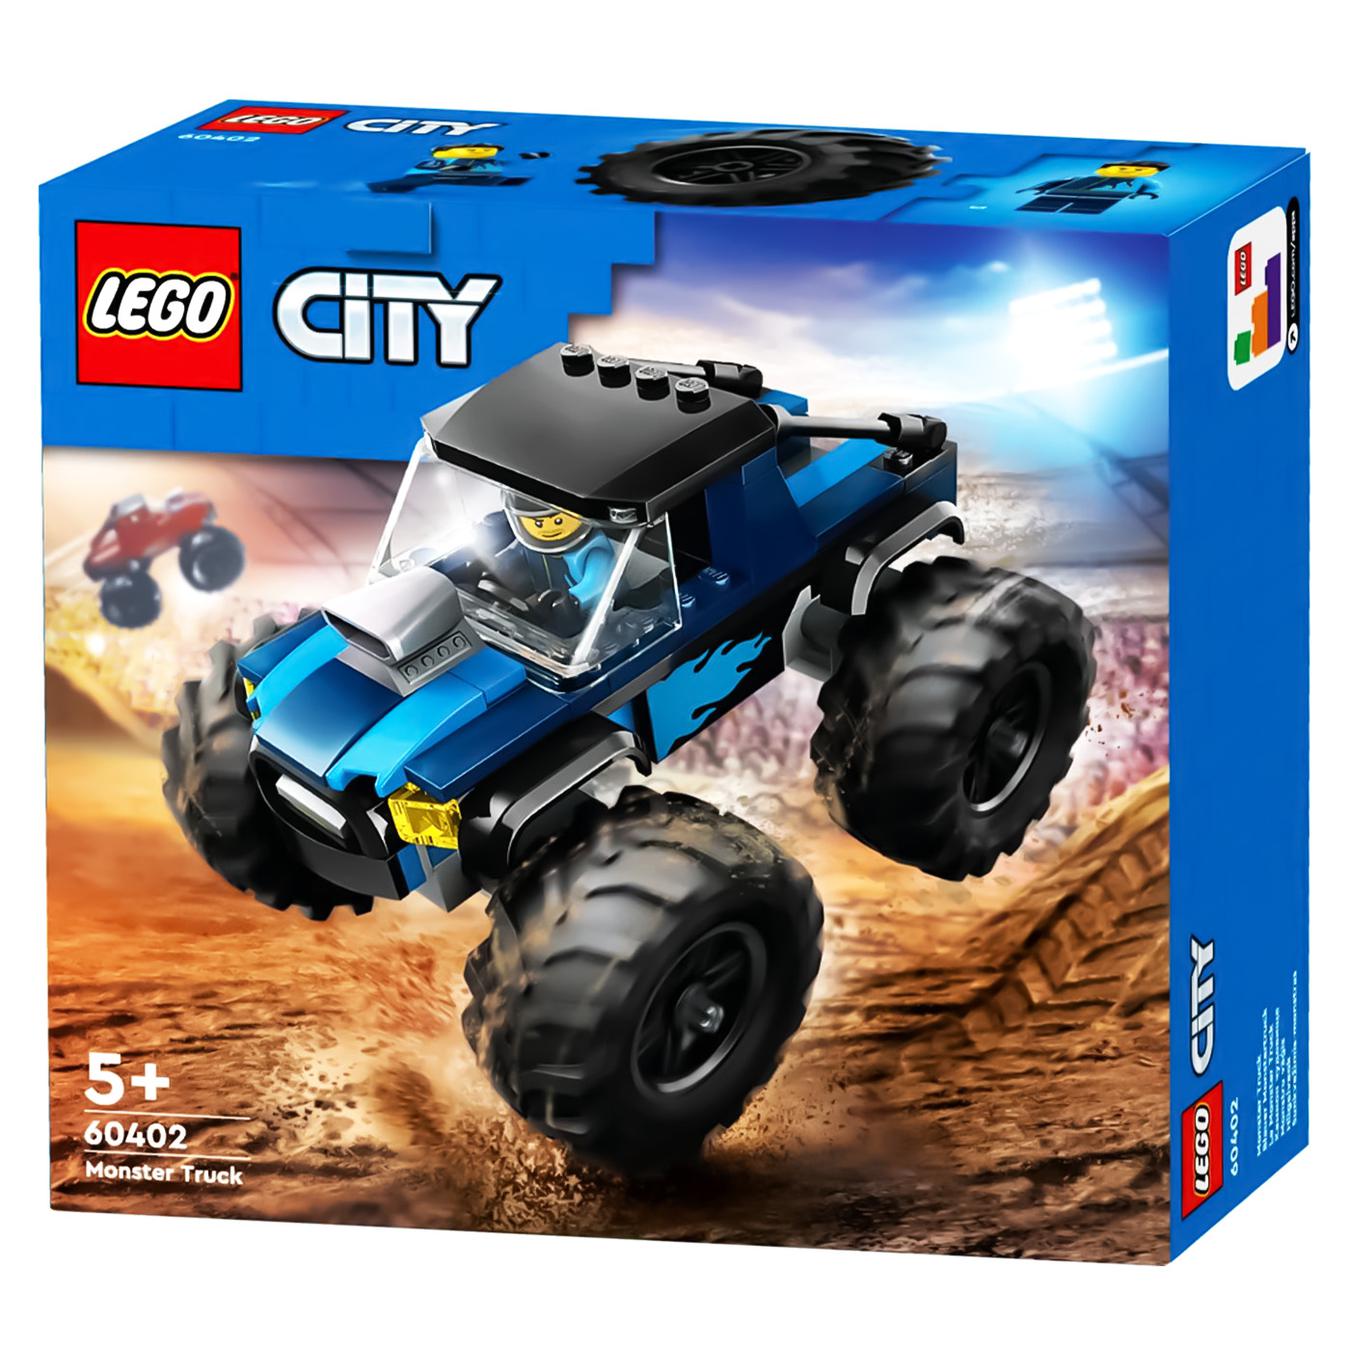 Constructor LEGO City 60402 Blue monster truck